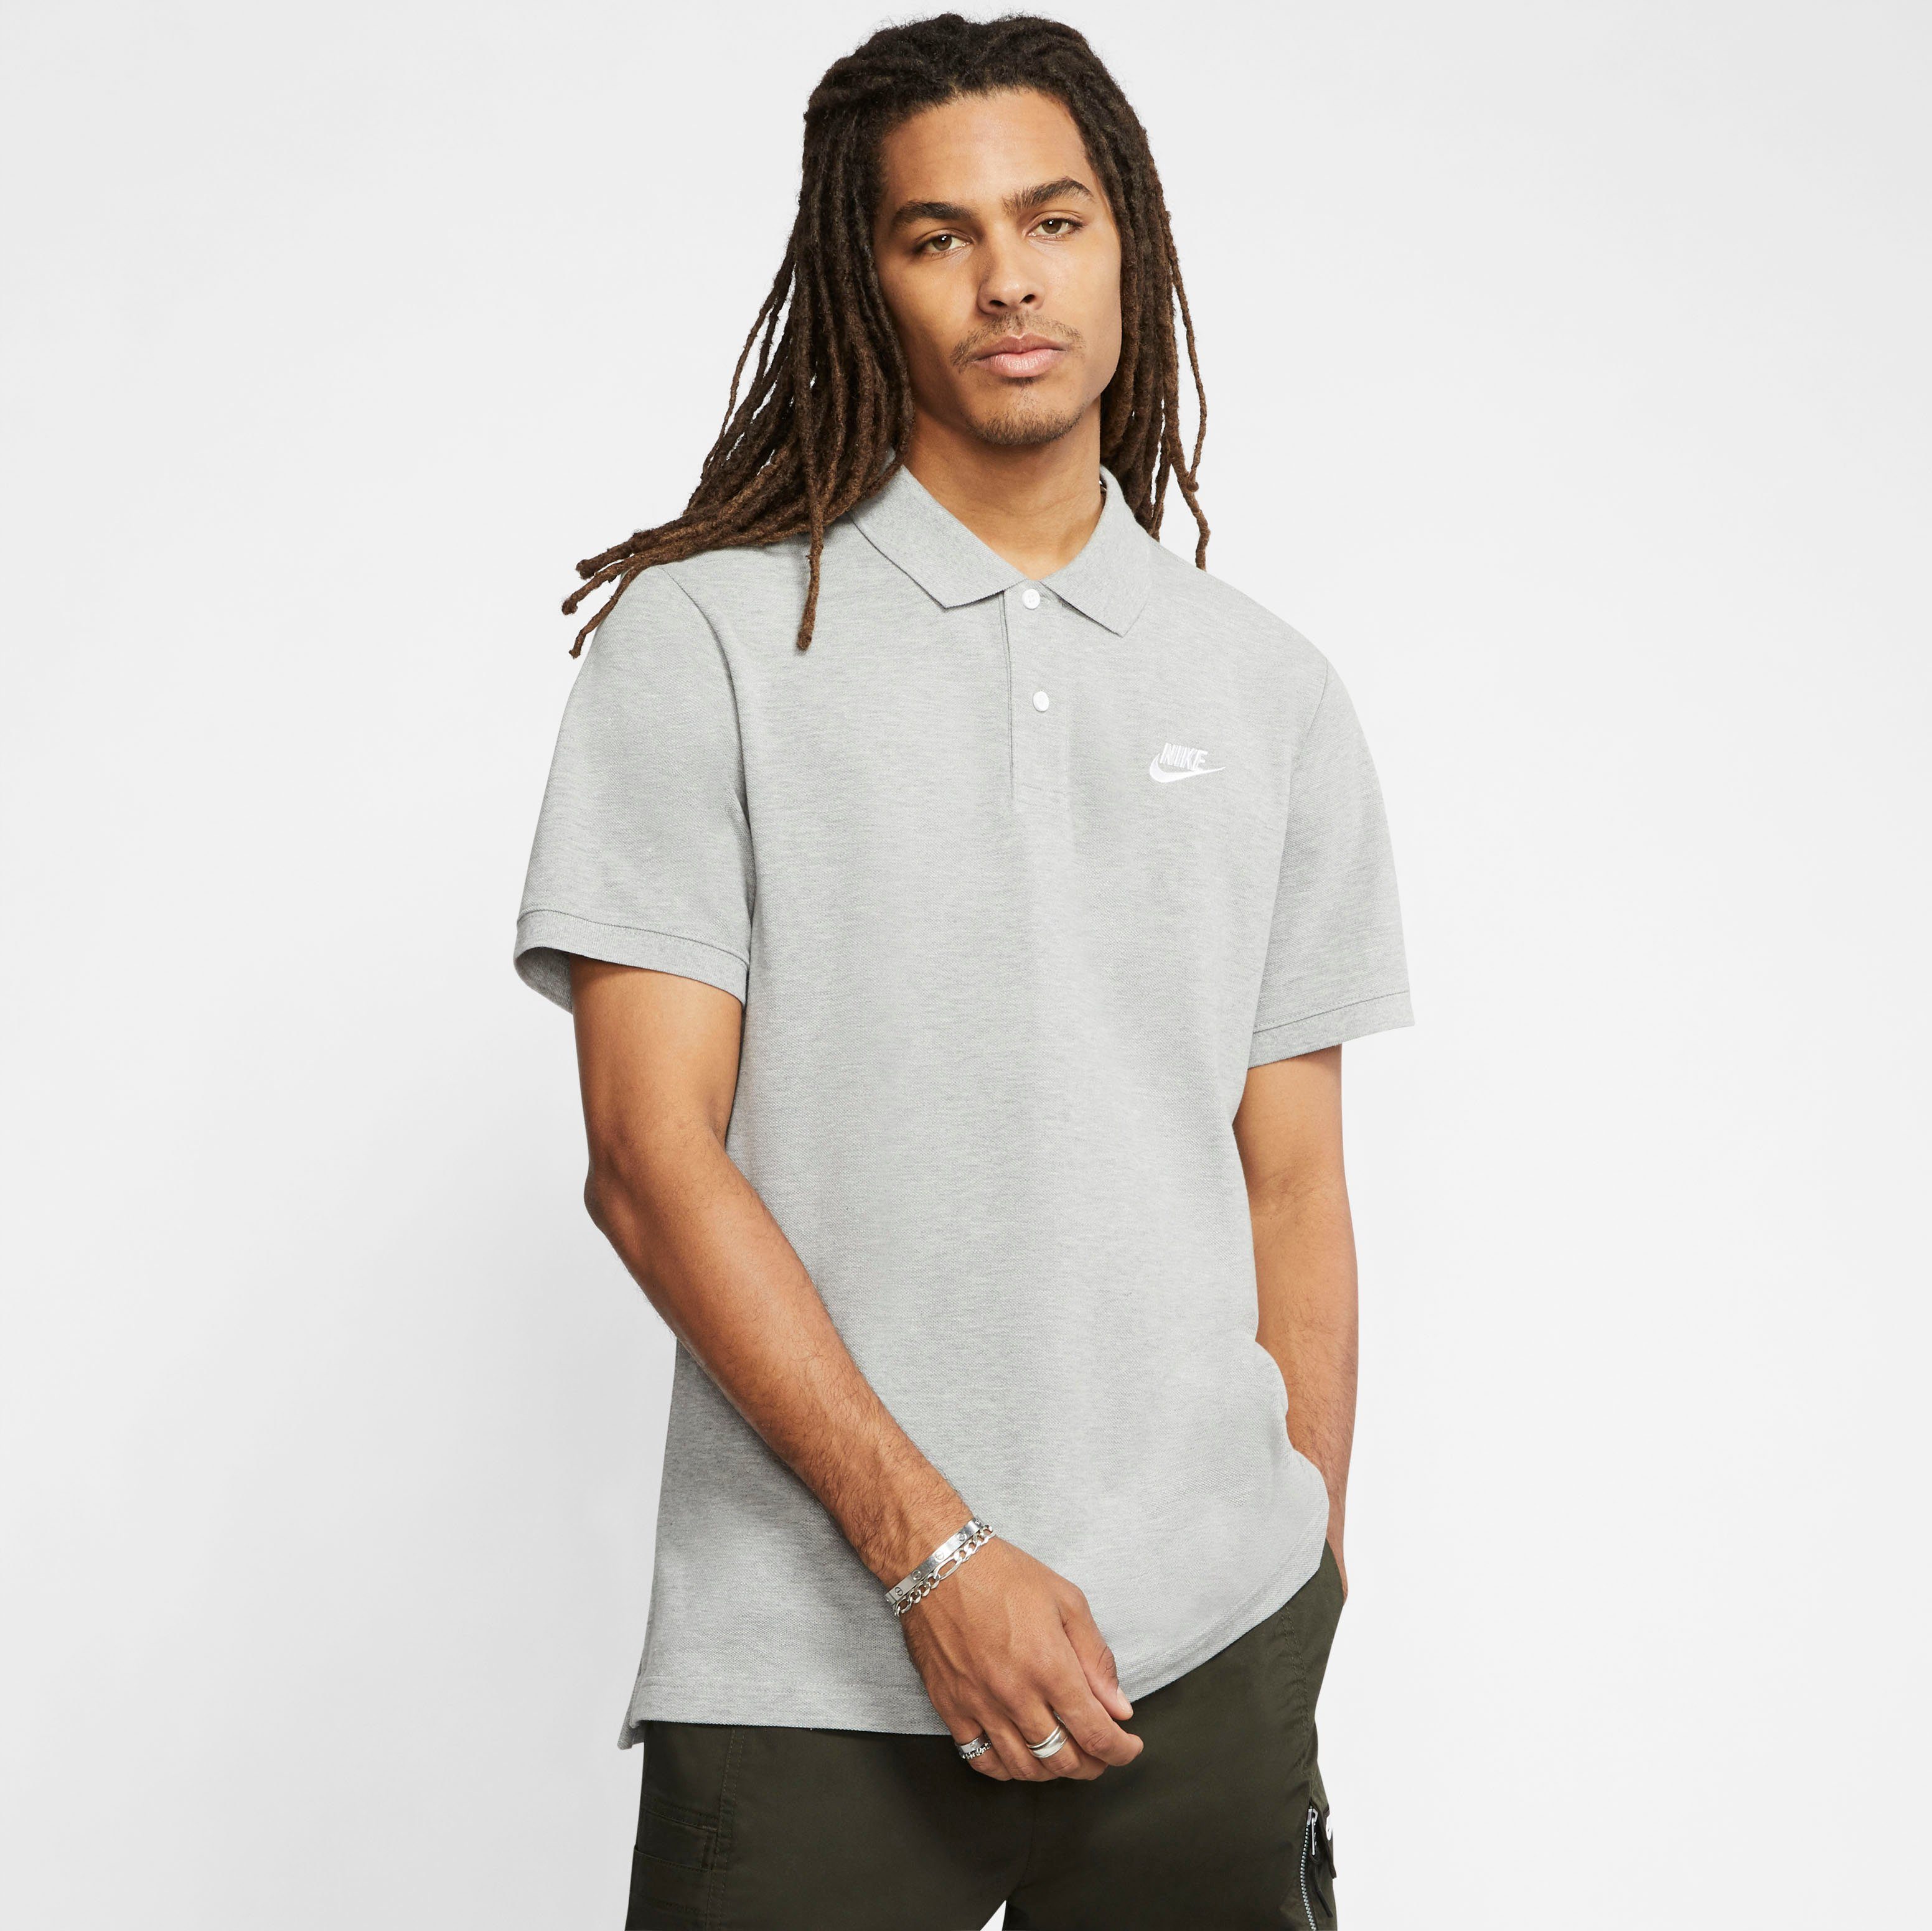 Nike Poloshirts online kaufen » Polohemden | OTTO